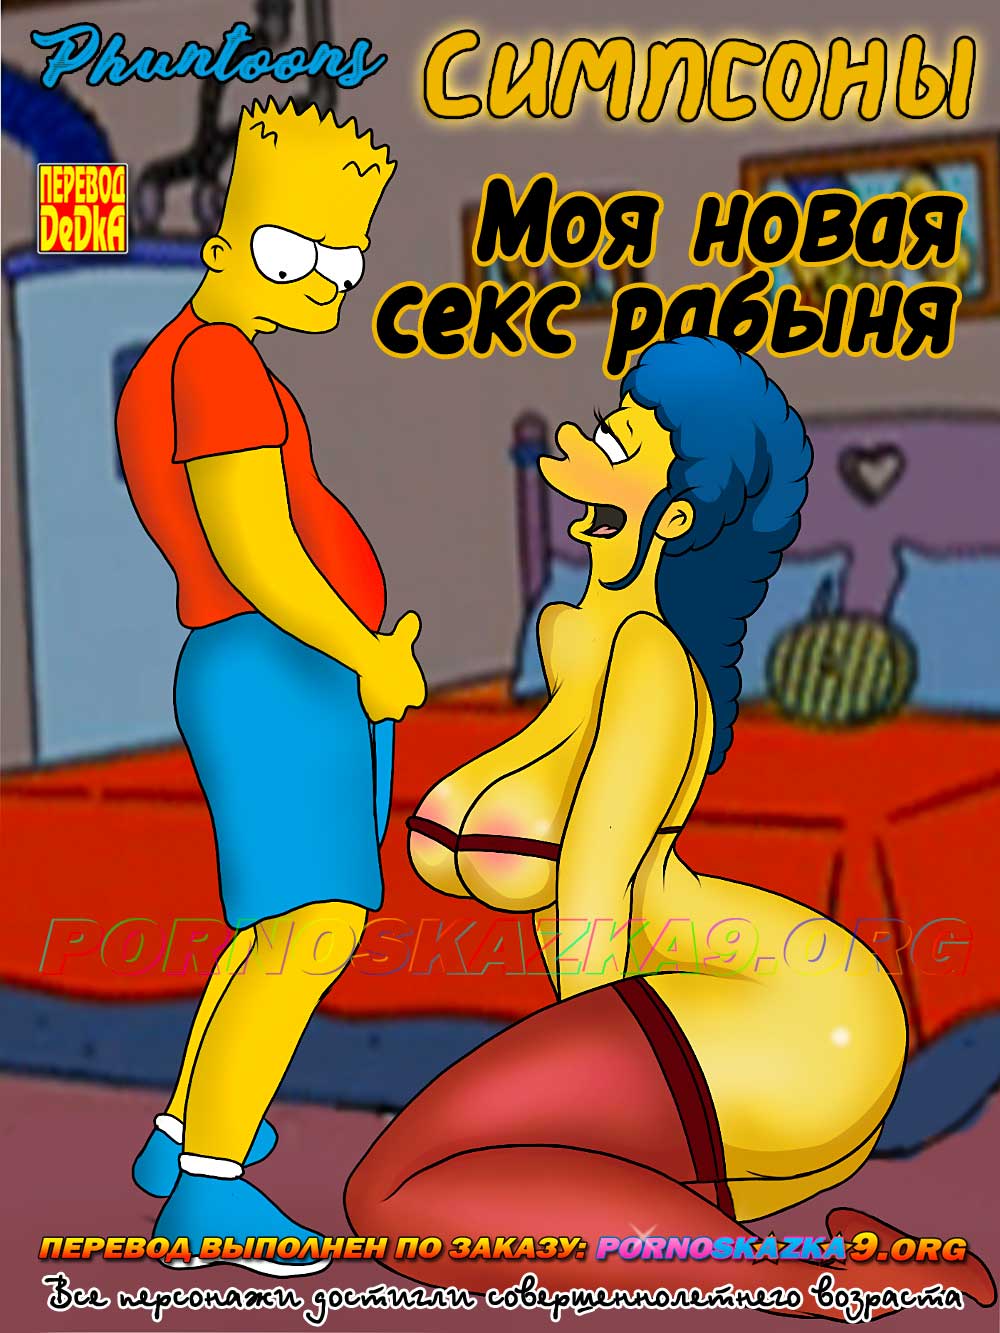 Бесплатное порно видео, XXX фото и эротика онлайн - optnp.ru